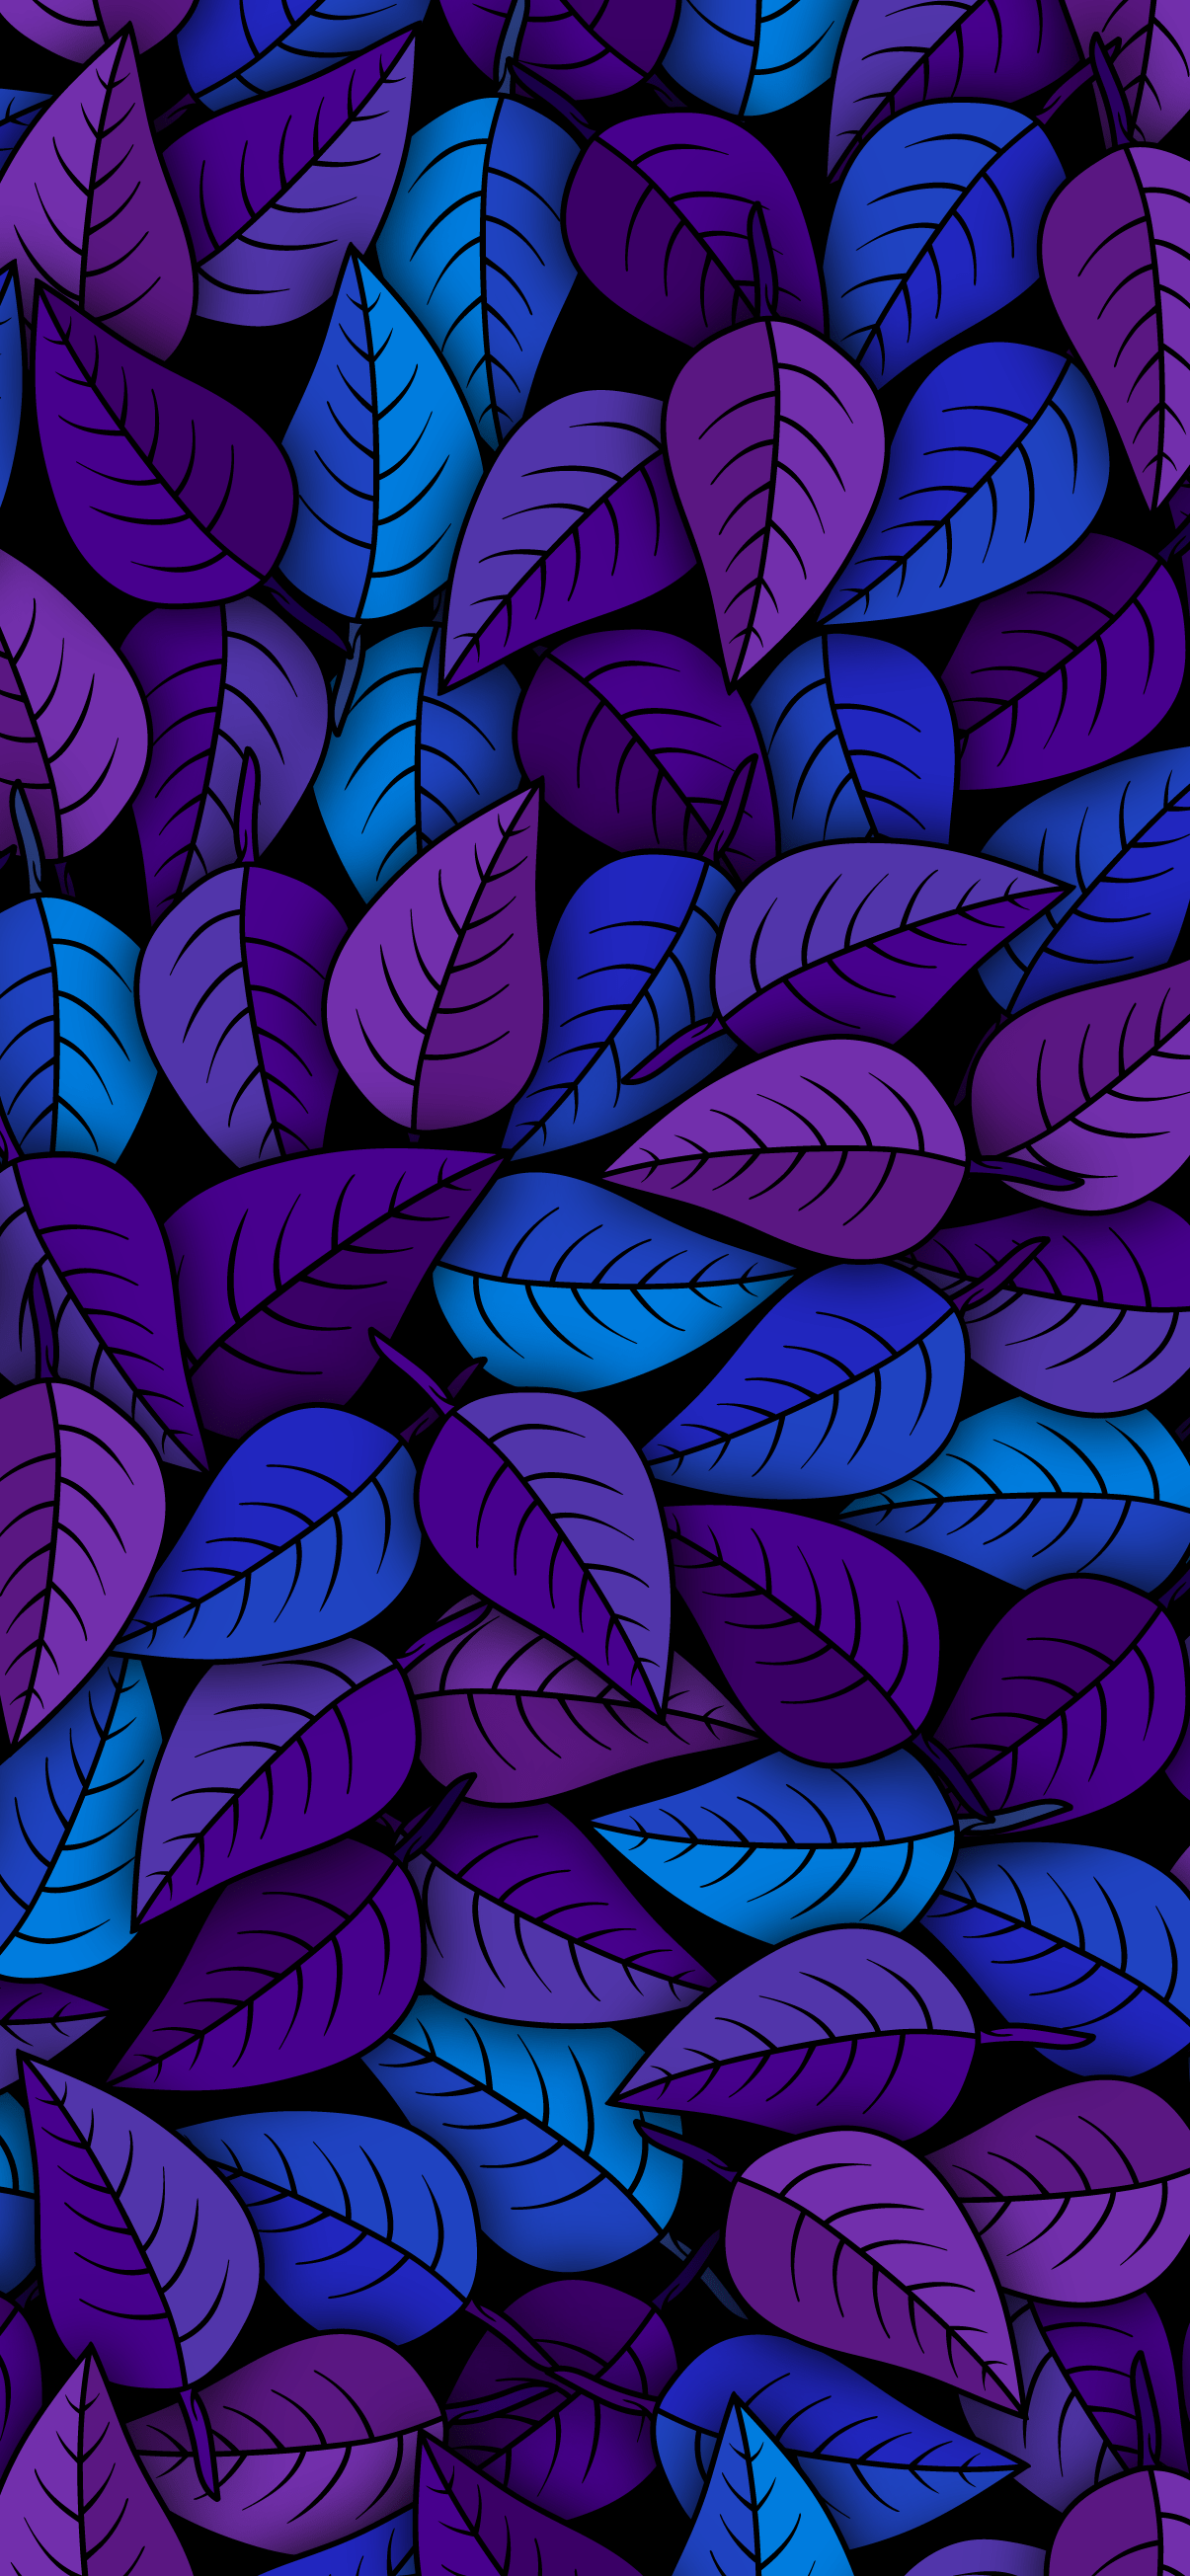 A seamless pattern of purple leaves - Leaves, pattern